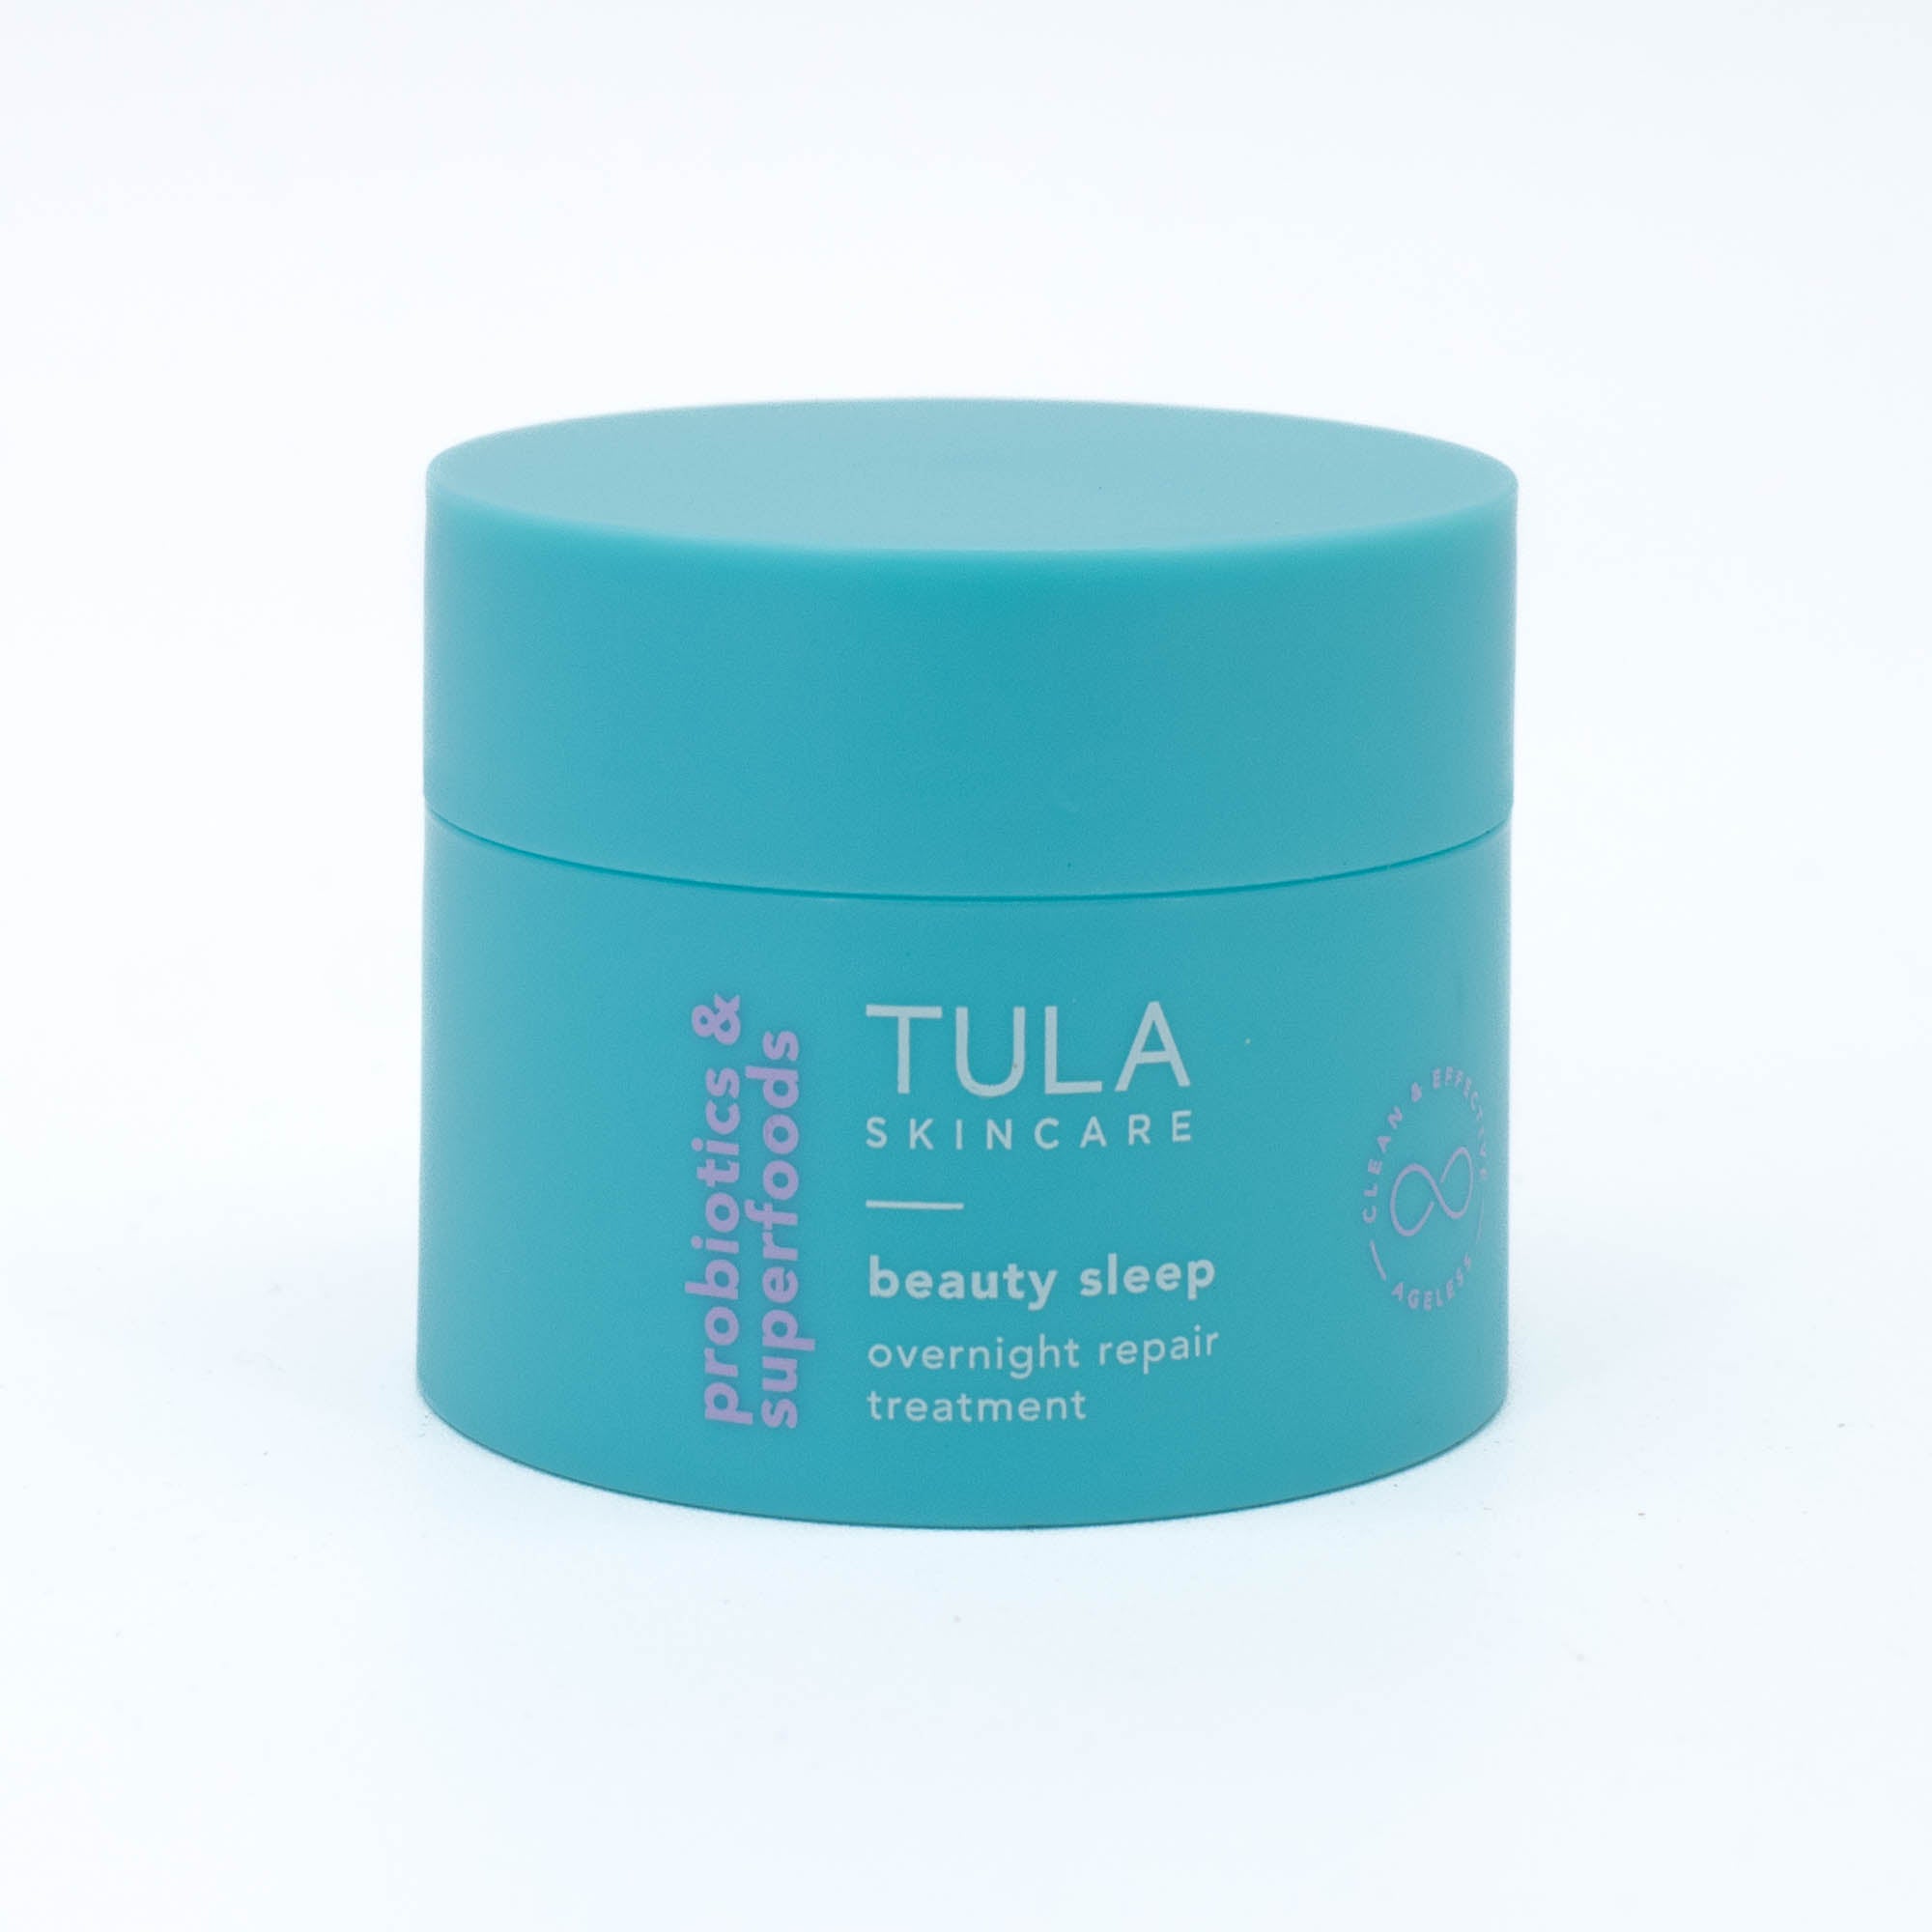 TULA Beauty Sleep Overnight Repair Treatment 0.53oz - Missing Box